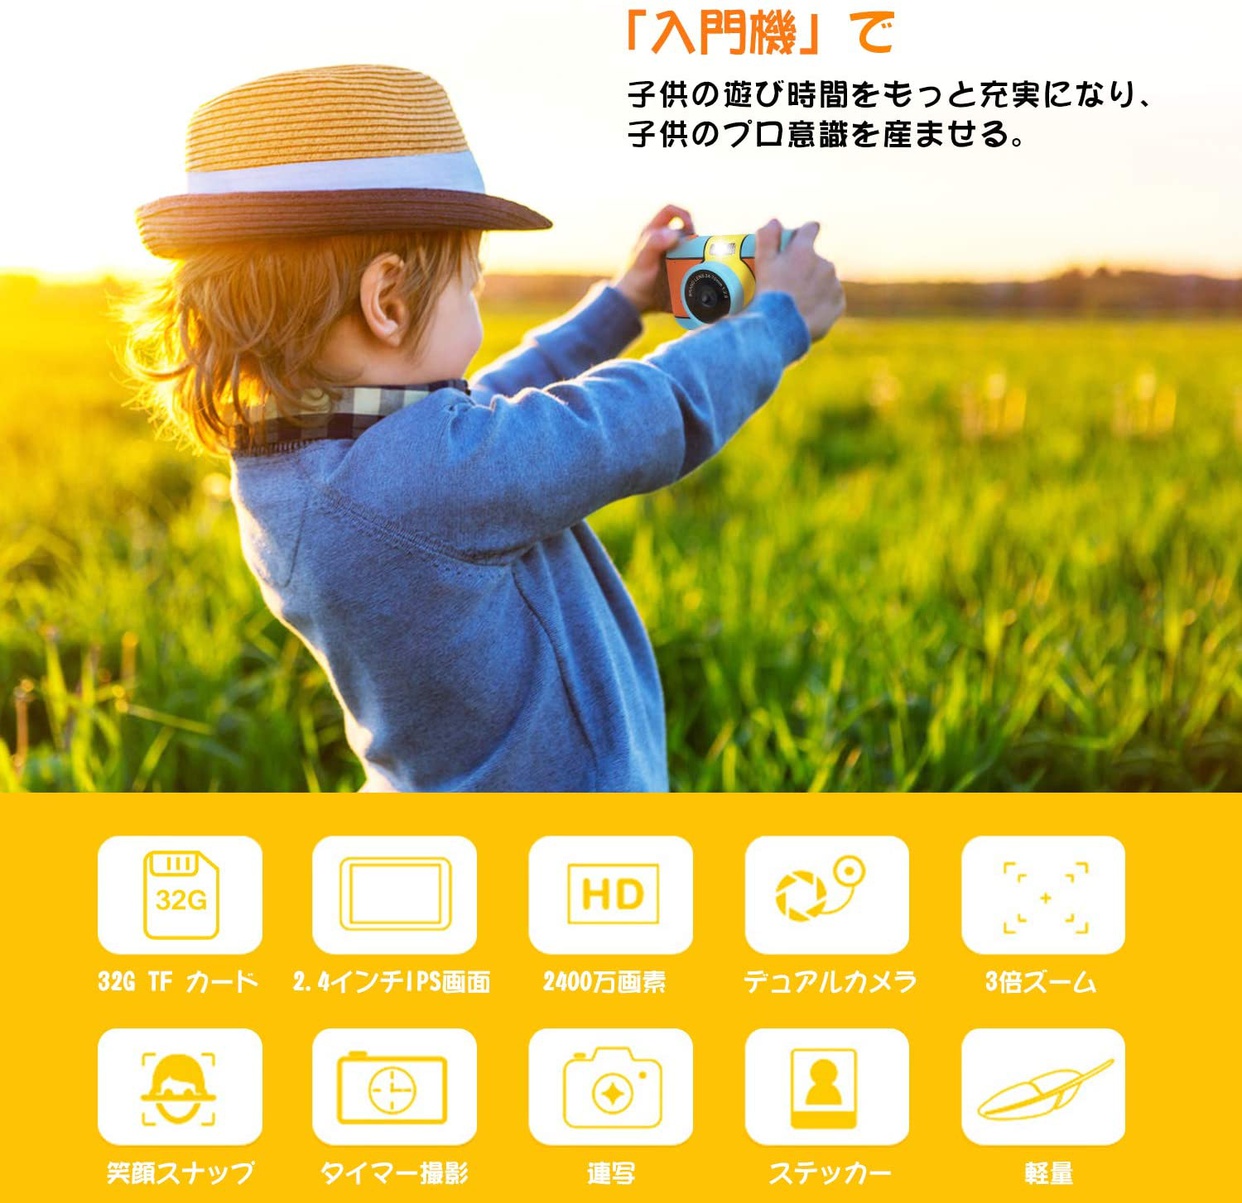 WisFox(ウィスフォックス) 子供用デジタルカメラの商品画像2 